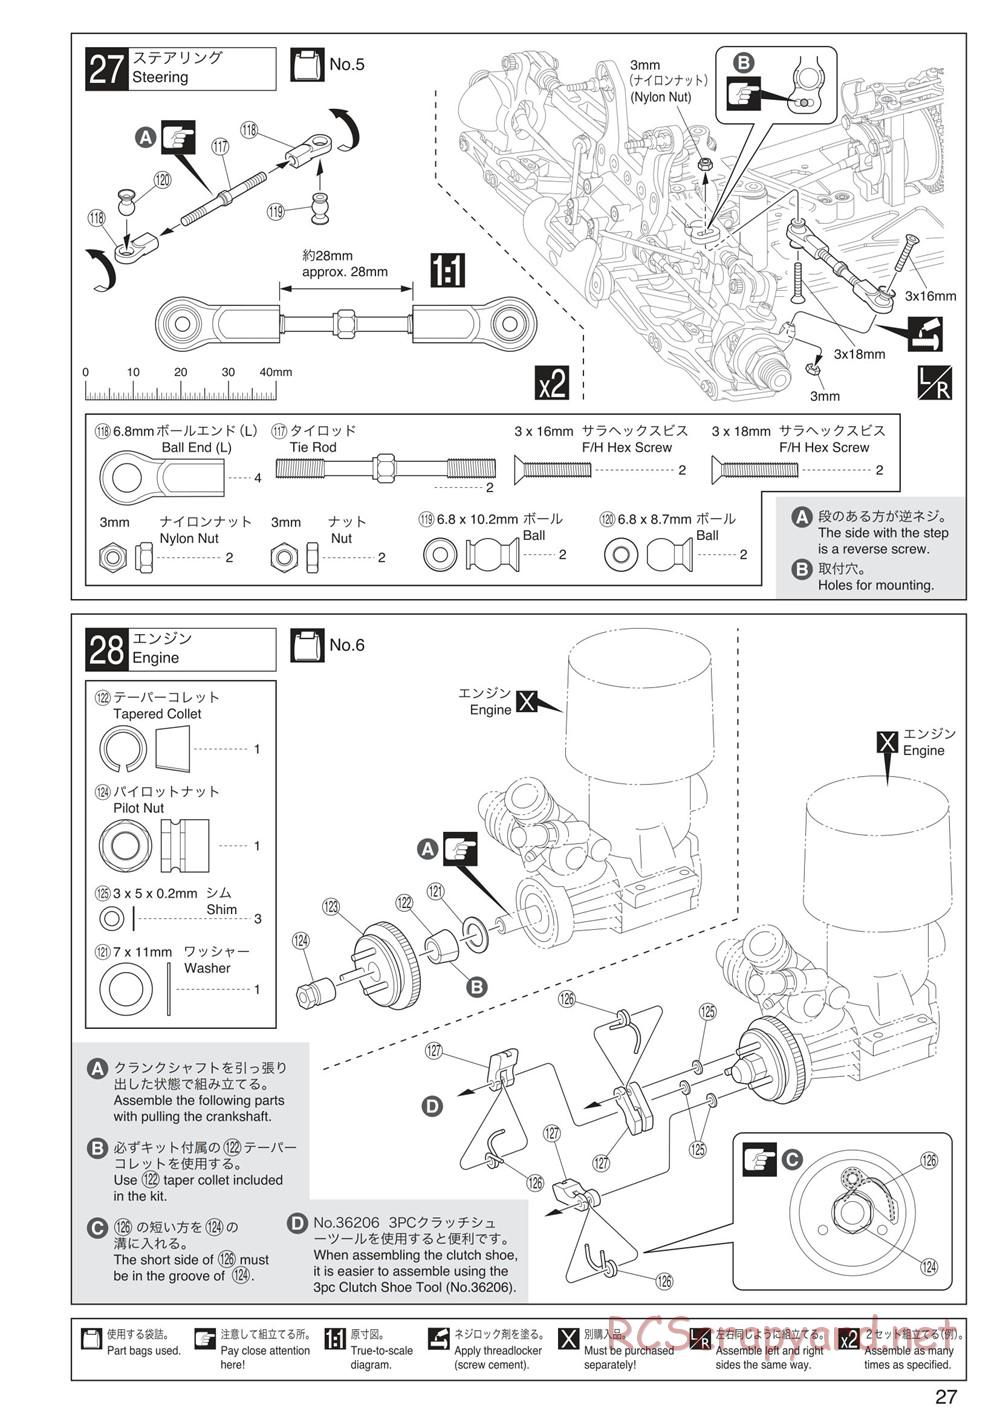 Kyosho - Inferno MP9 TKI3 - Manual - Page 27